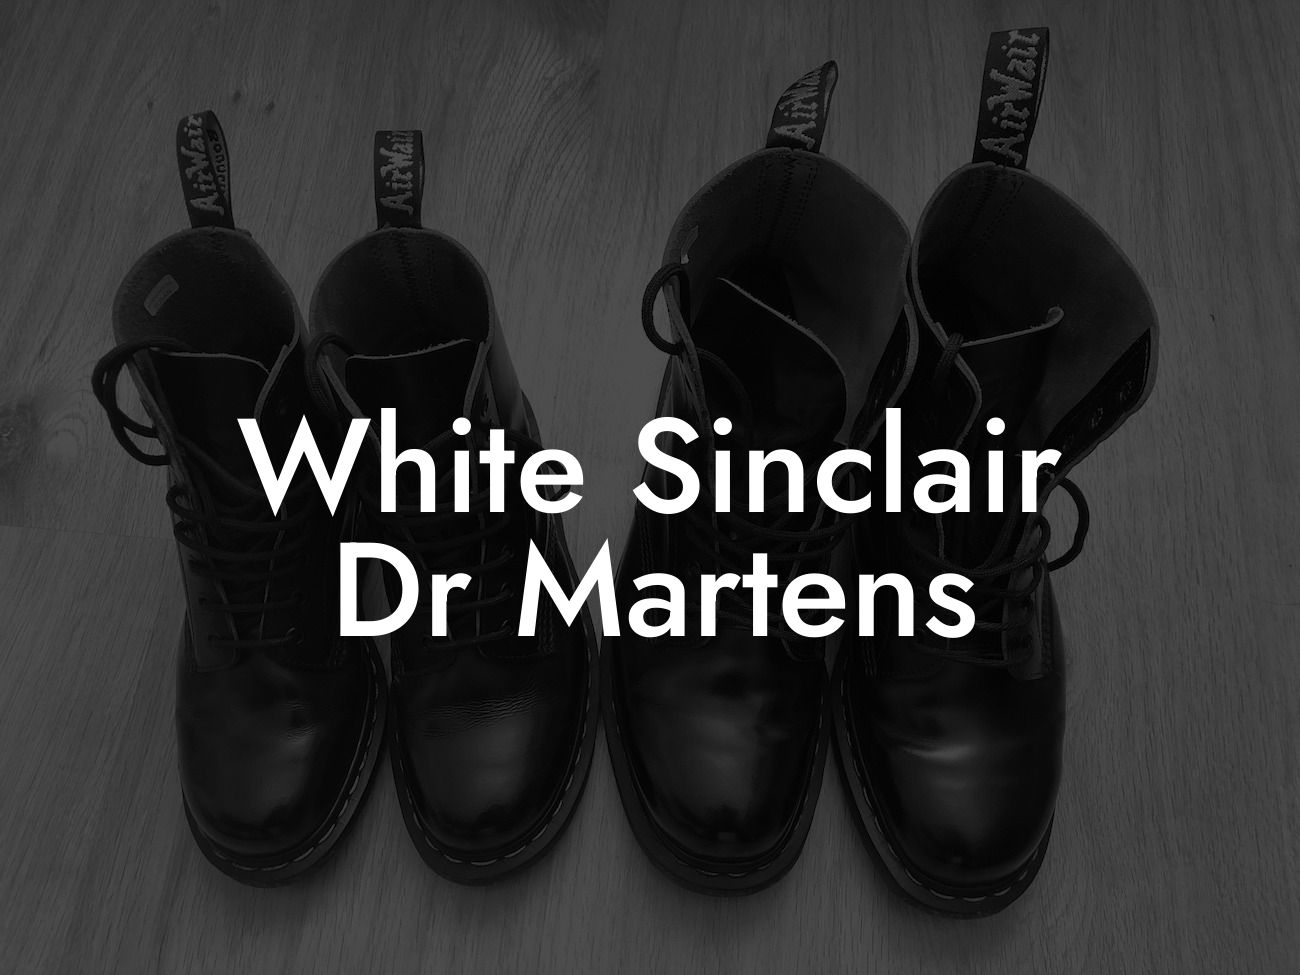 White Sinclair Dr Martens